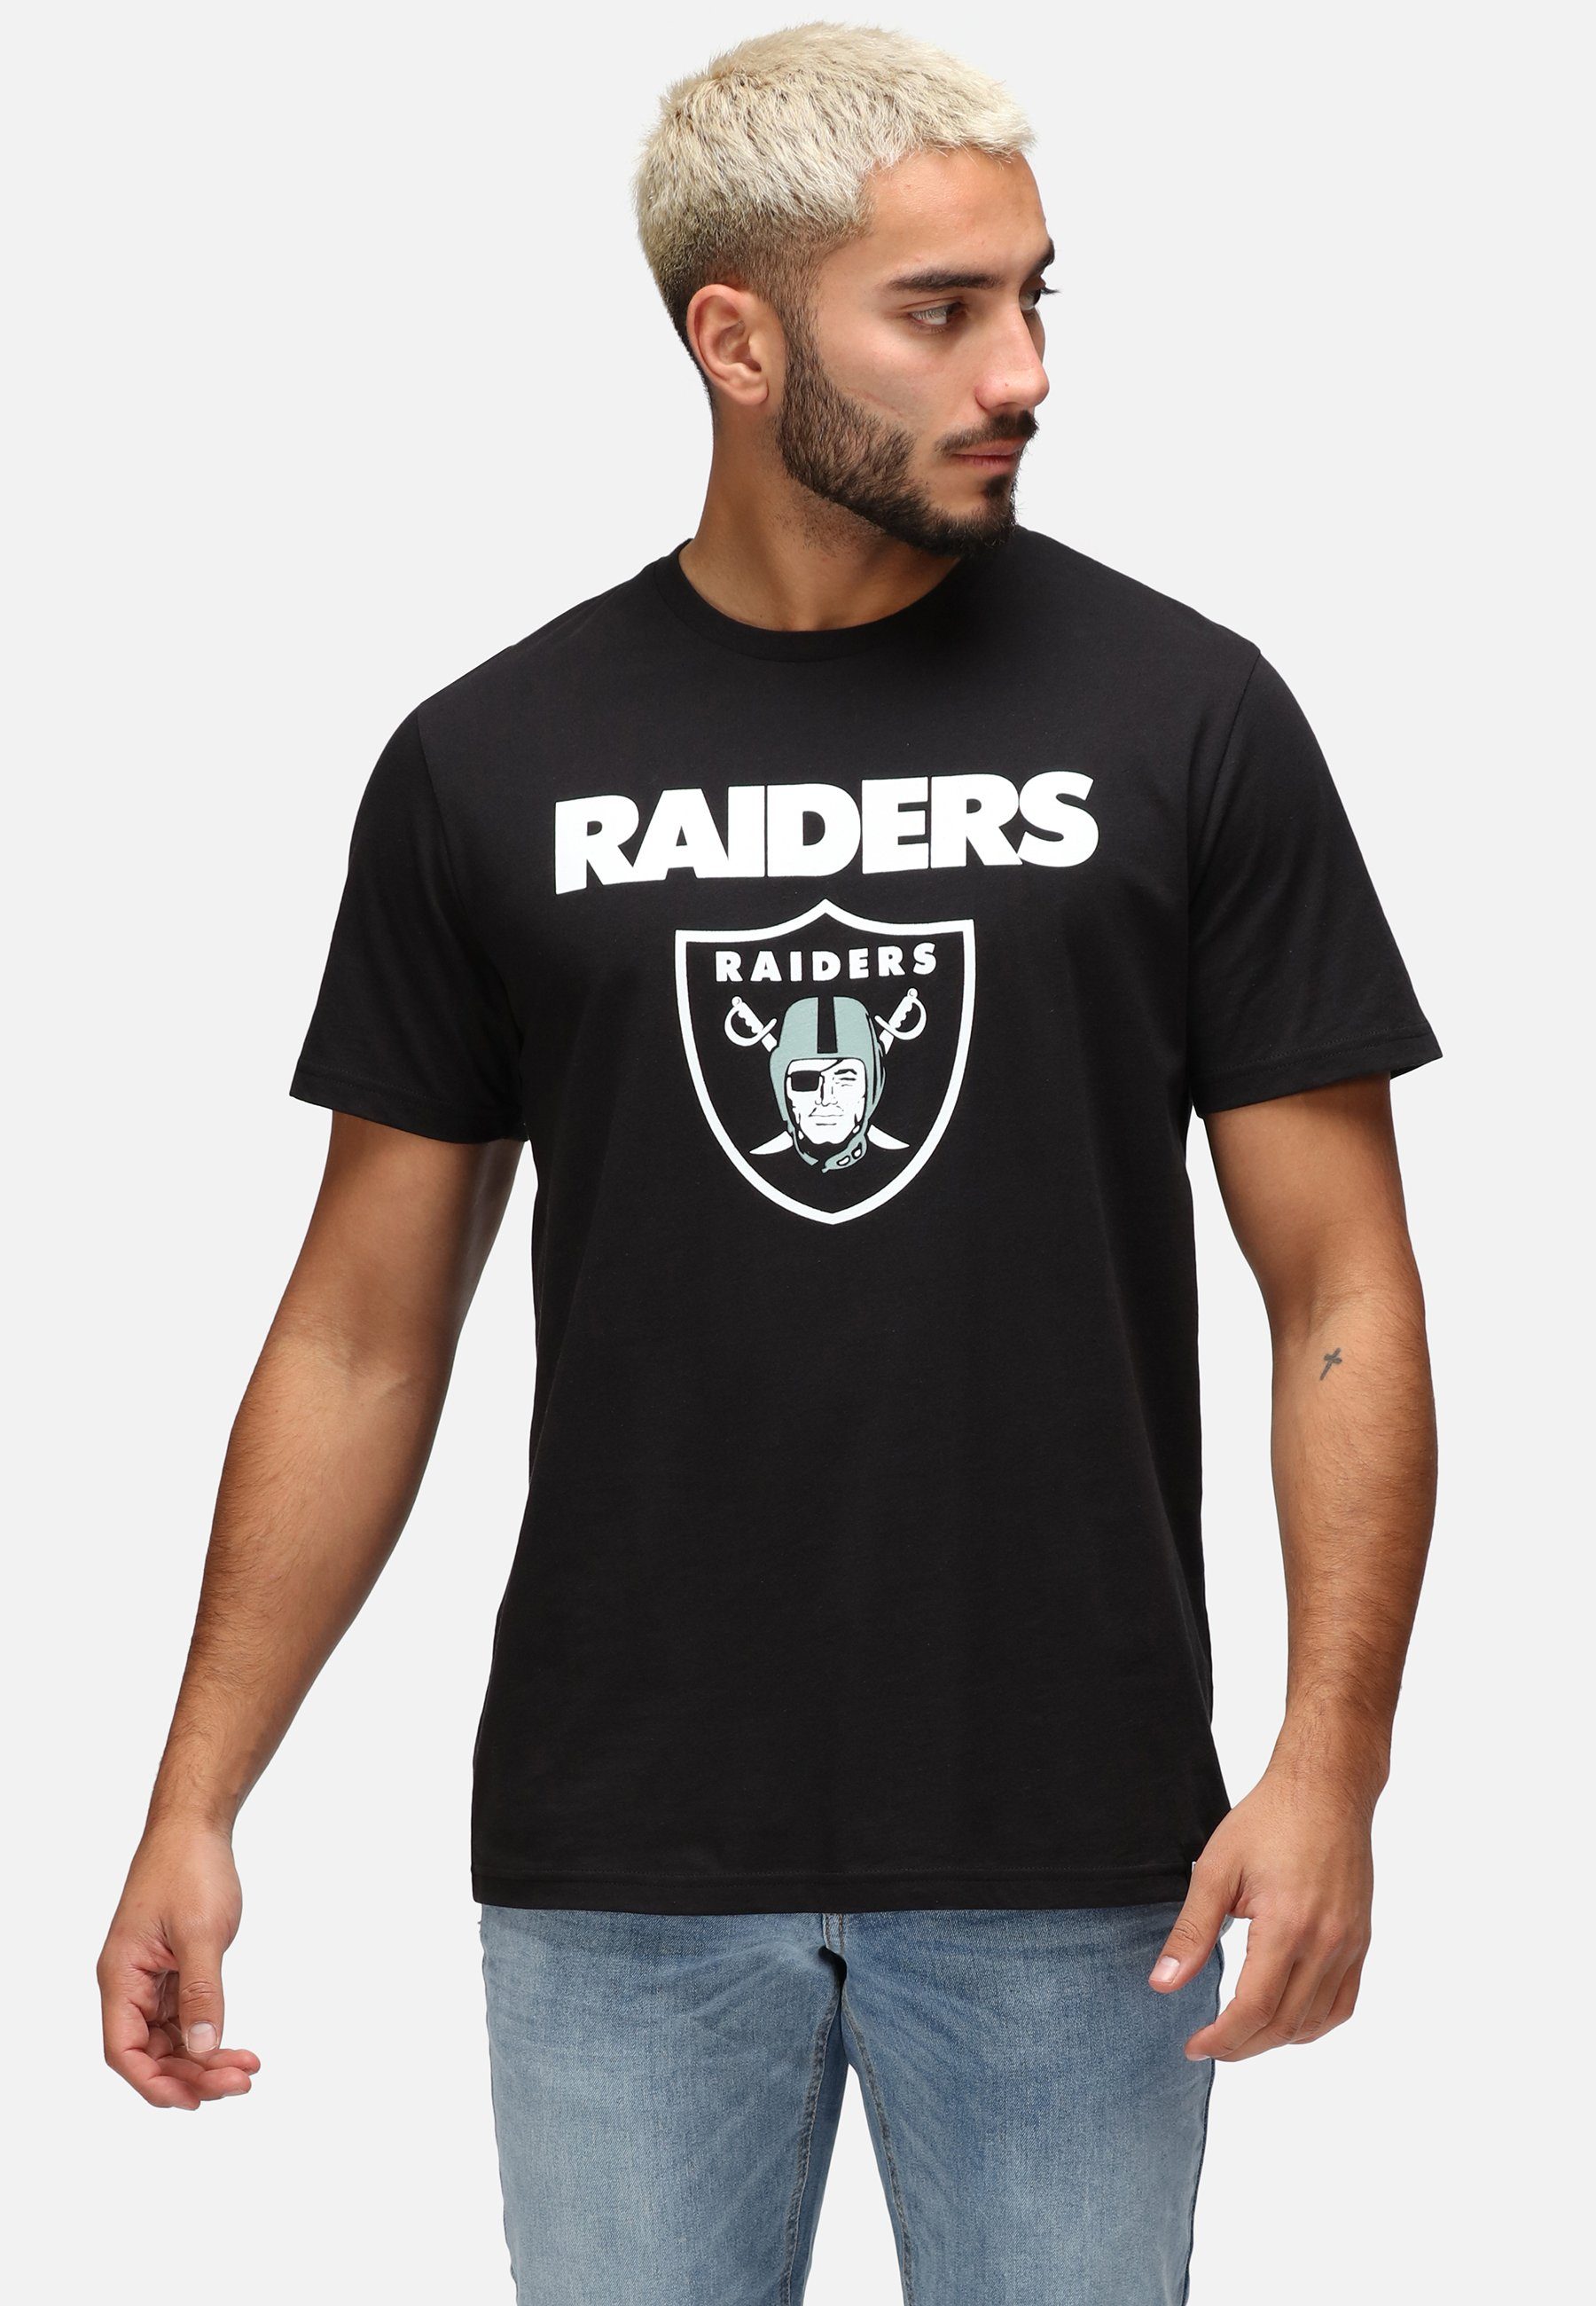 GOTS zertifizierte T-Shirt LOGO RAIDERS NFL Bio-Baumwolle Recovered